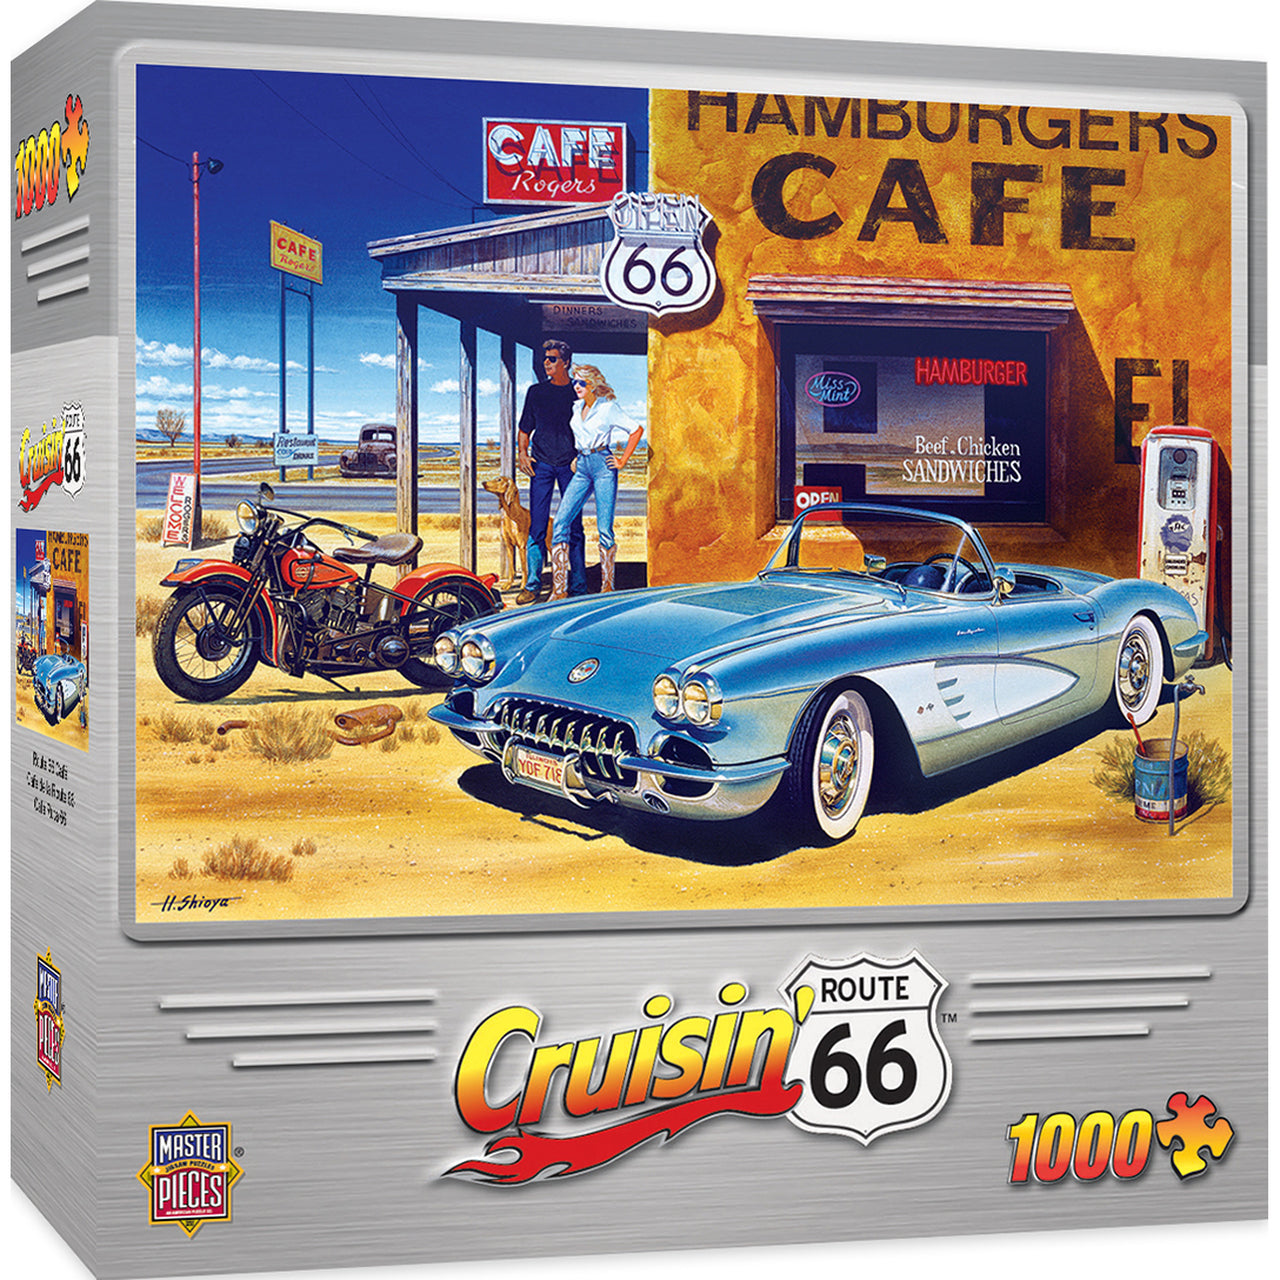 Cruisin' Route 66 - Route 66 Café 1000 Piece Jigsaw Puzzle by Masterpieces